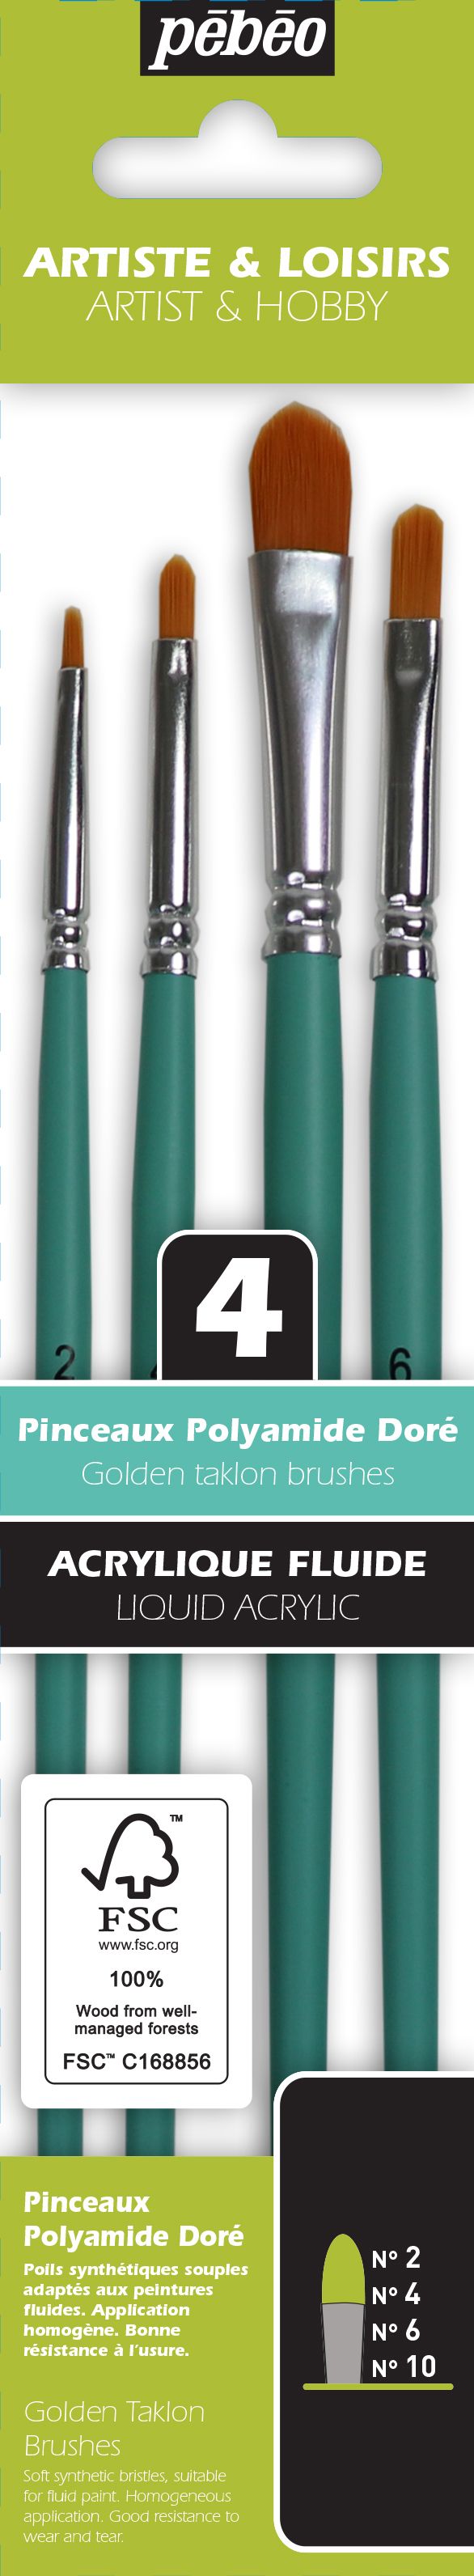 Pochette de 4 pinceaux Filbert assortis manche court polyamide doré n°2,4,6 & 10